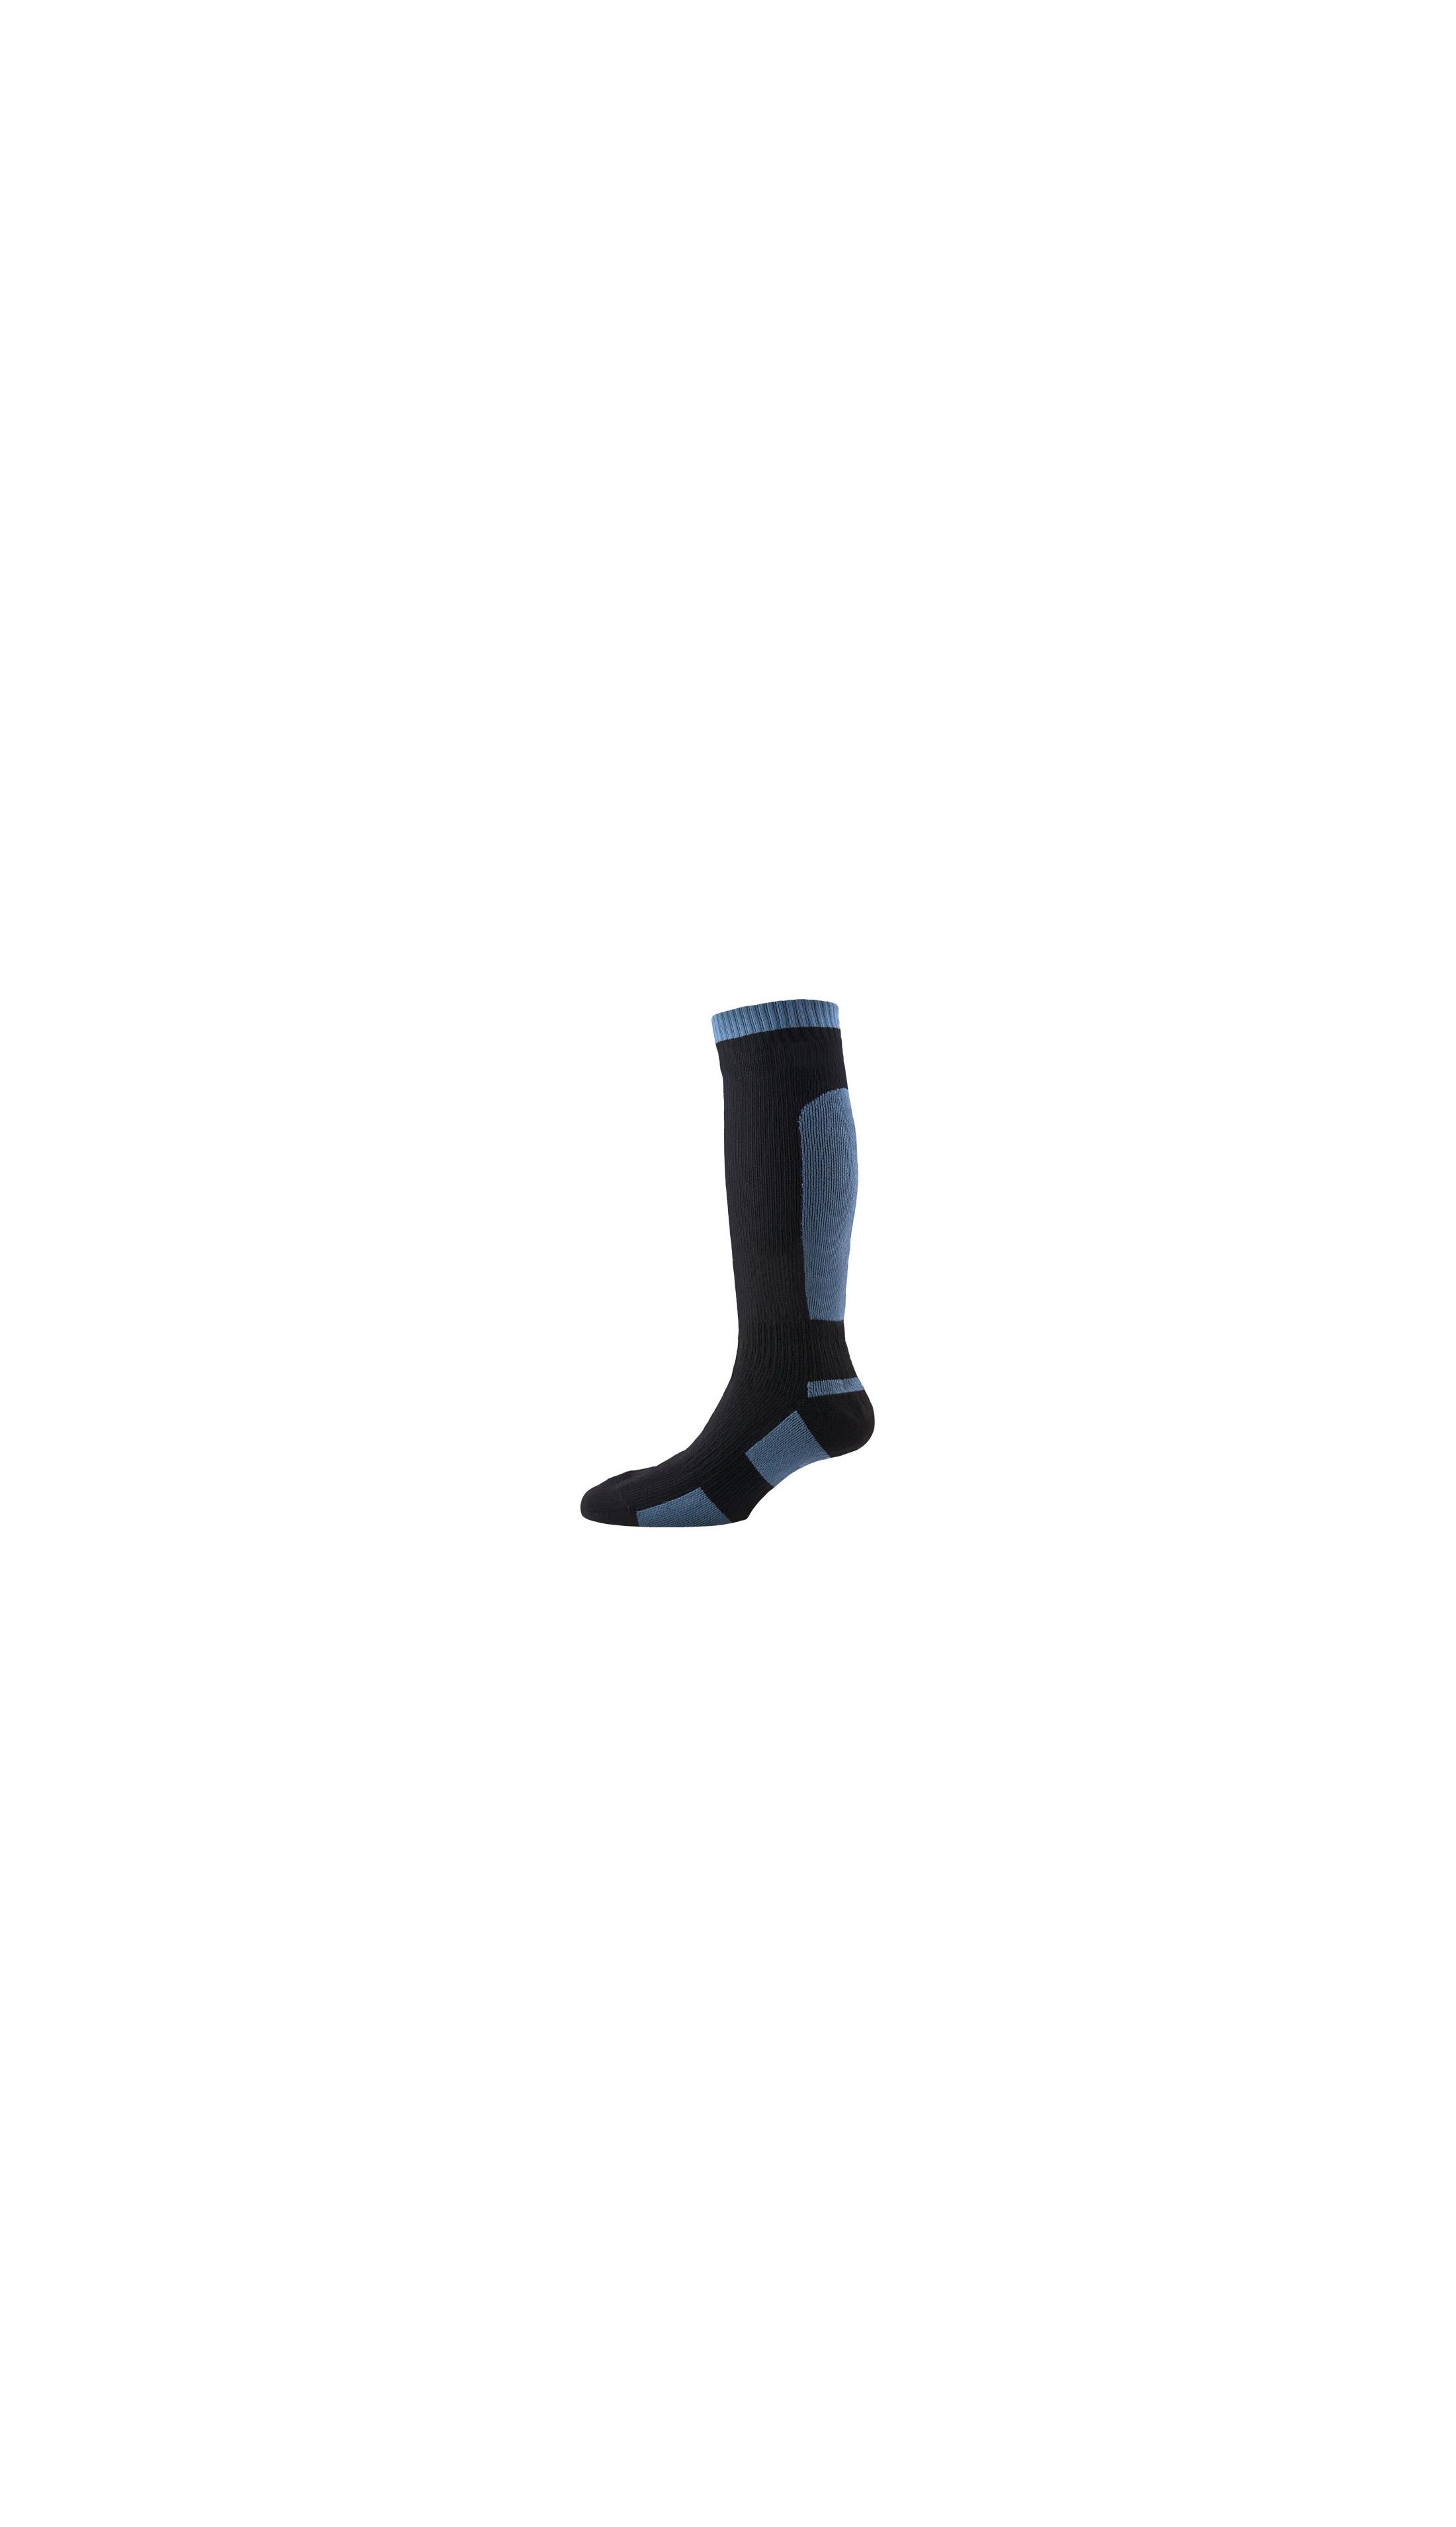 SealSkinz Mid Weight Knee Length Waterproof Socks OutdoorGB